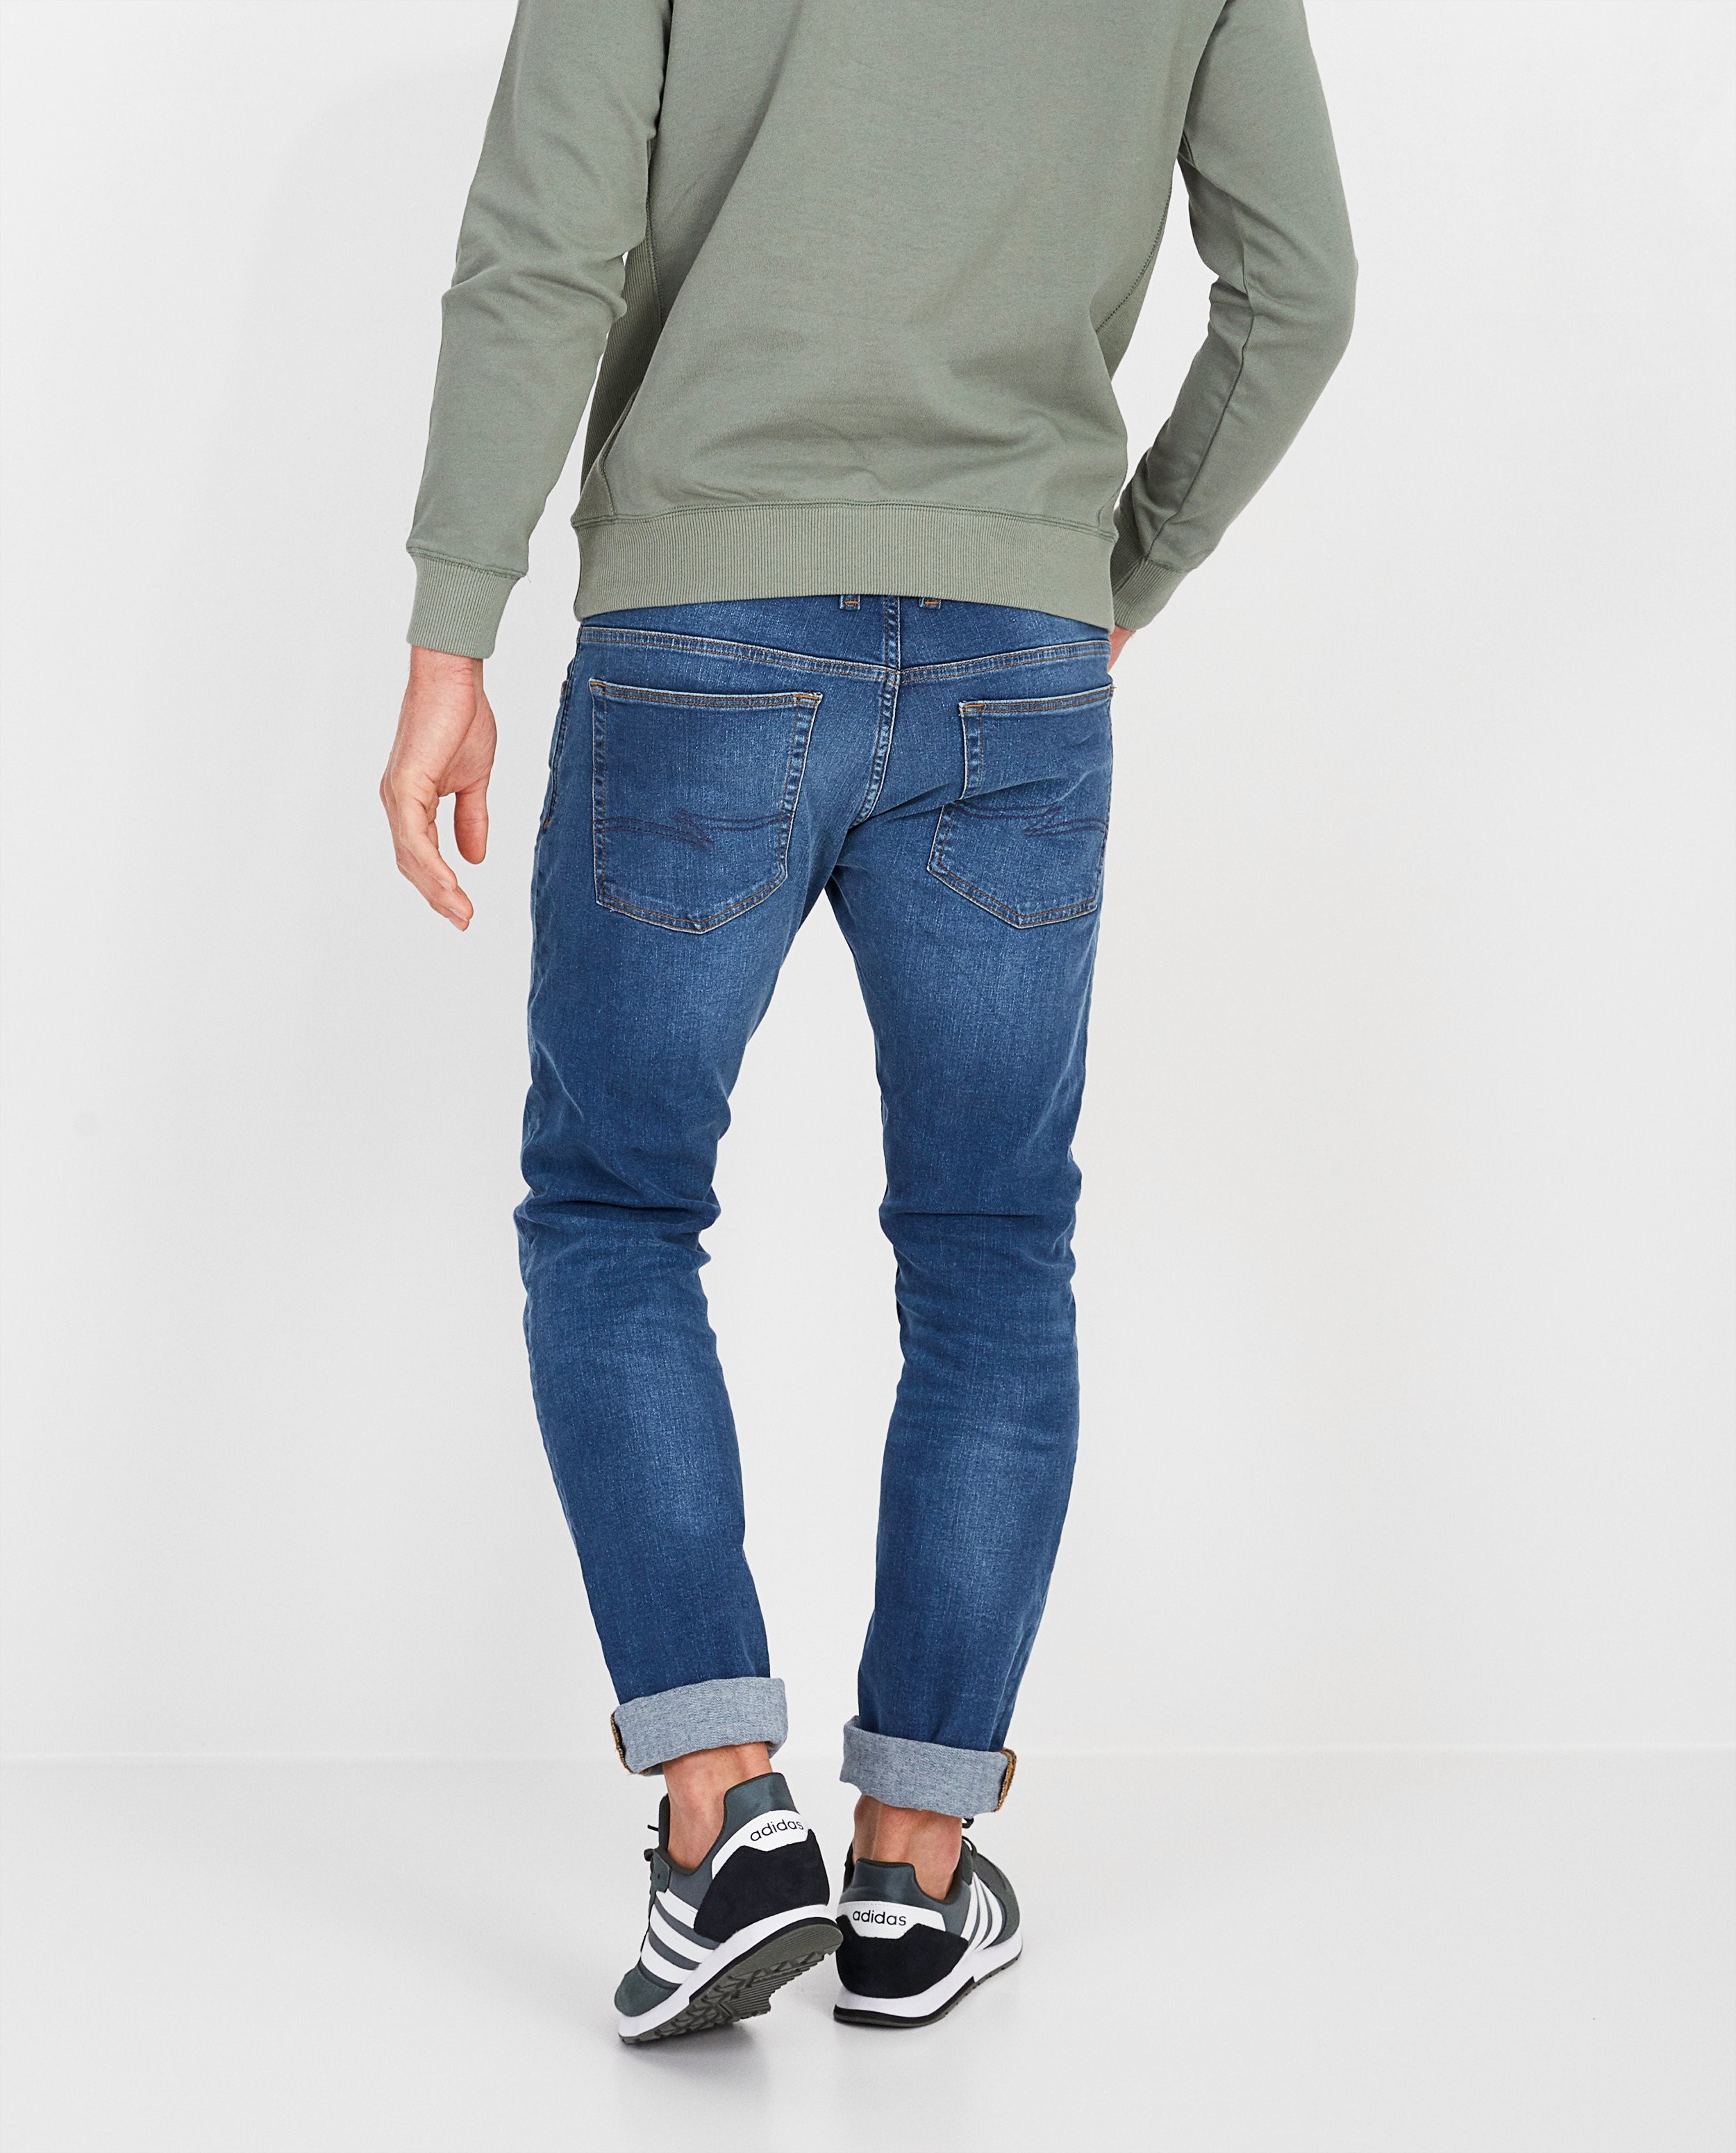 Jeans - Blauwe slim jeans Rick - s.Oliver